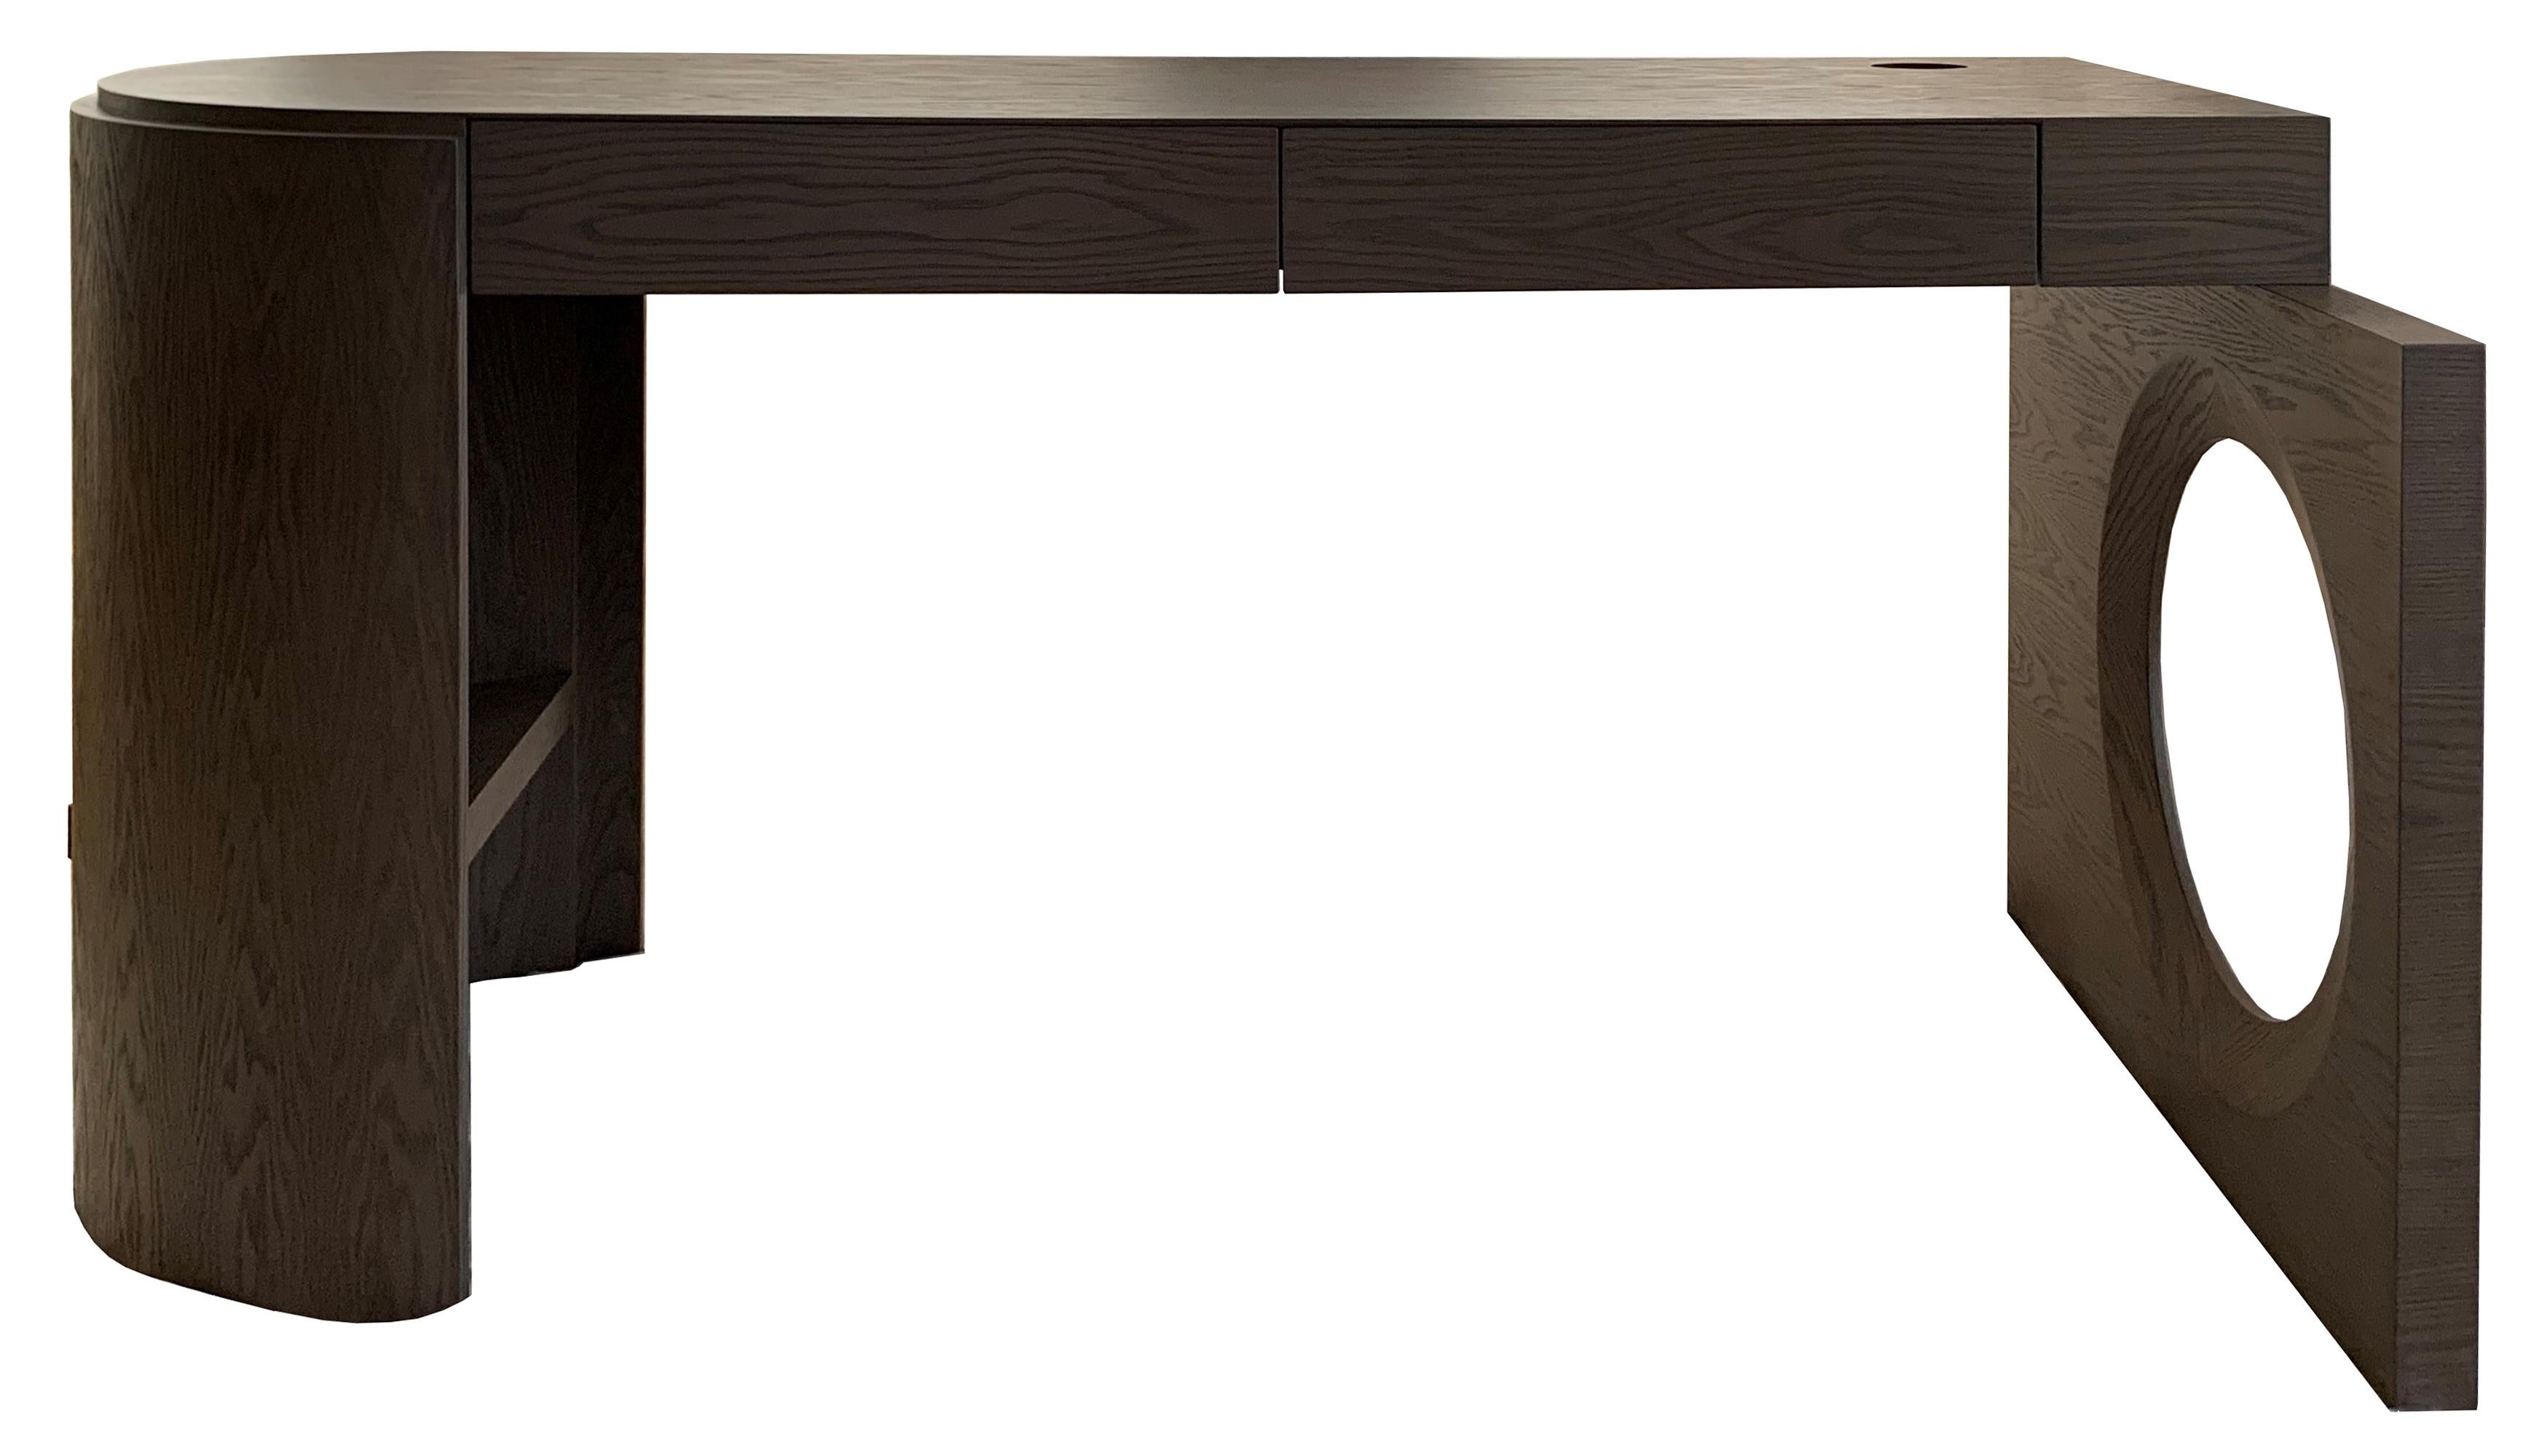 Description: Geometry desk
Color: Grey
Size: 145 x 60/75 x 73 H cm
Material: Oak
Collection: Interlock

Wooden desk grey oak veneer with drawer.
Geometric design.
Customisable sizes upon request.